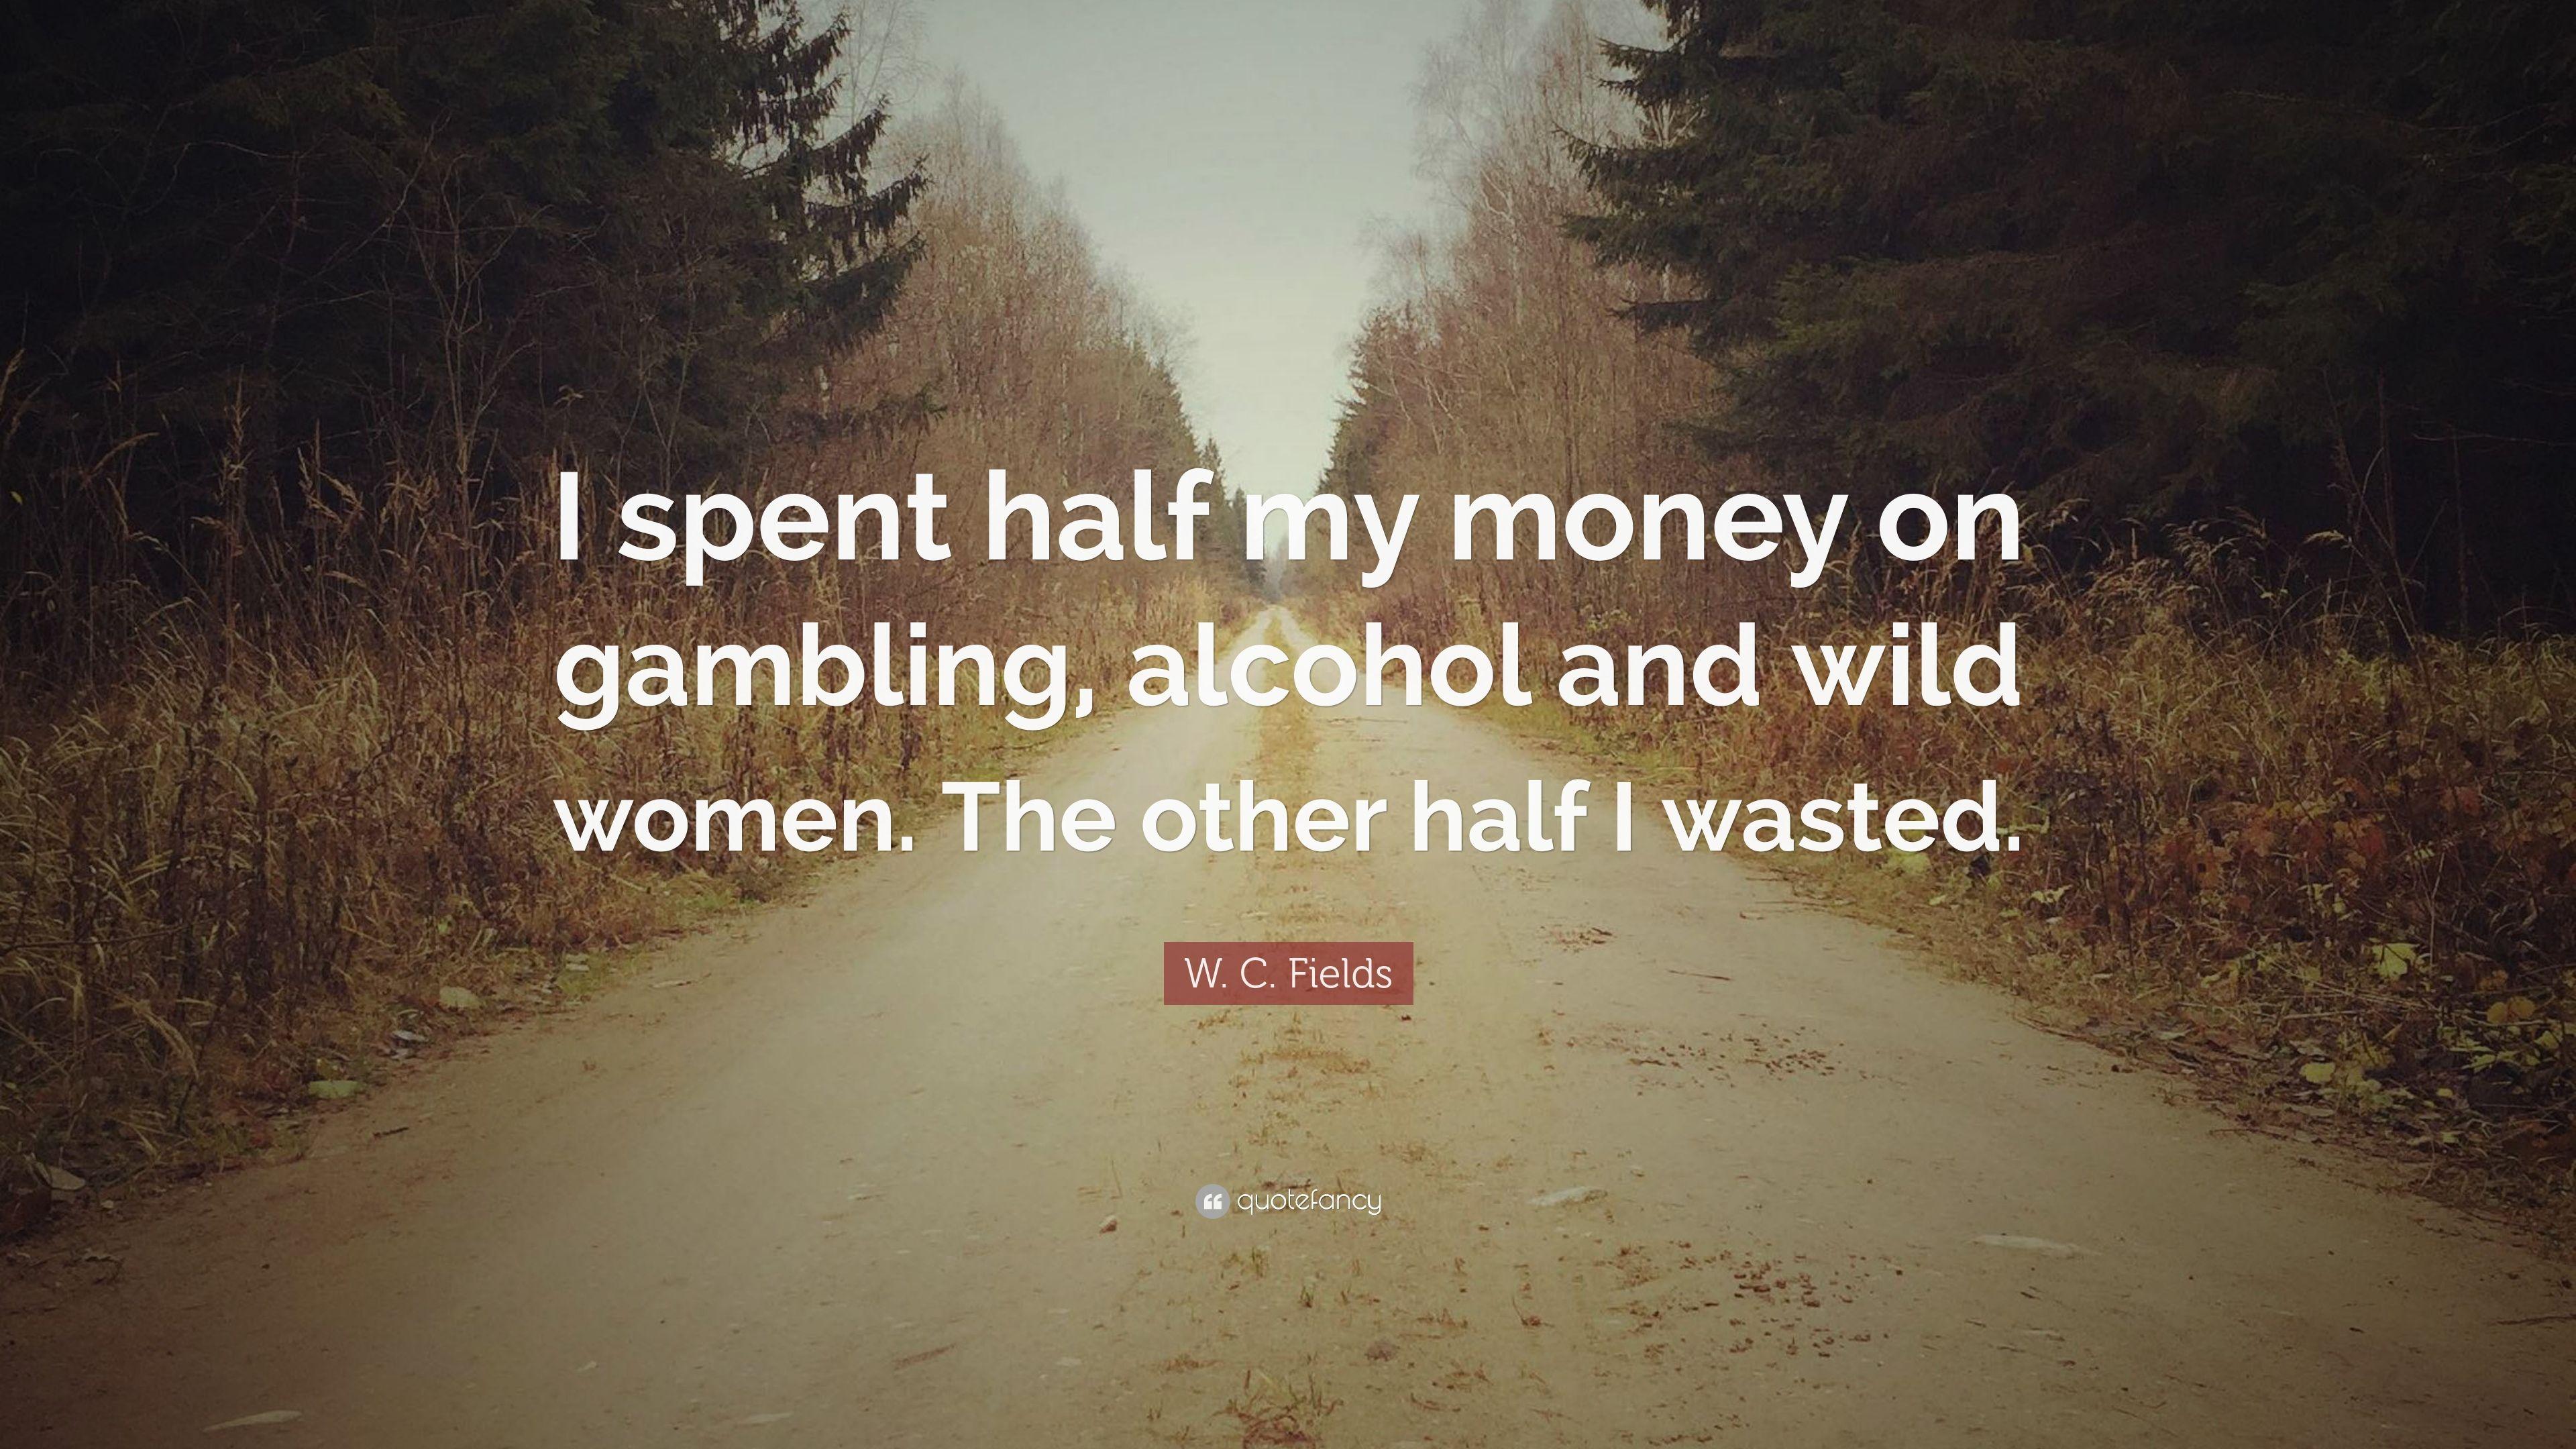 W. C. Fields Quote: “I spent half my money on gambling, alcohol